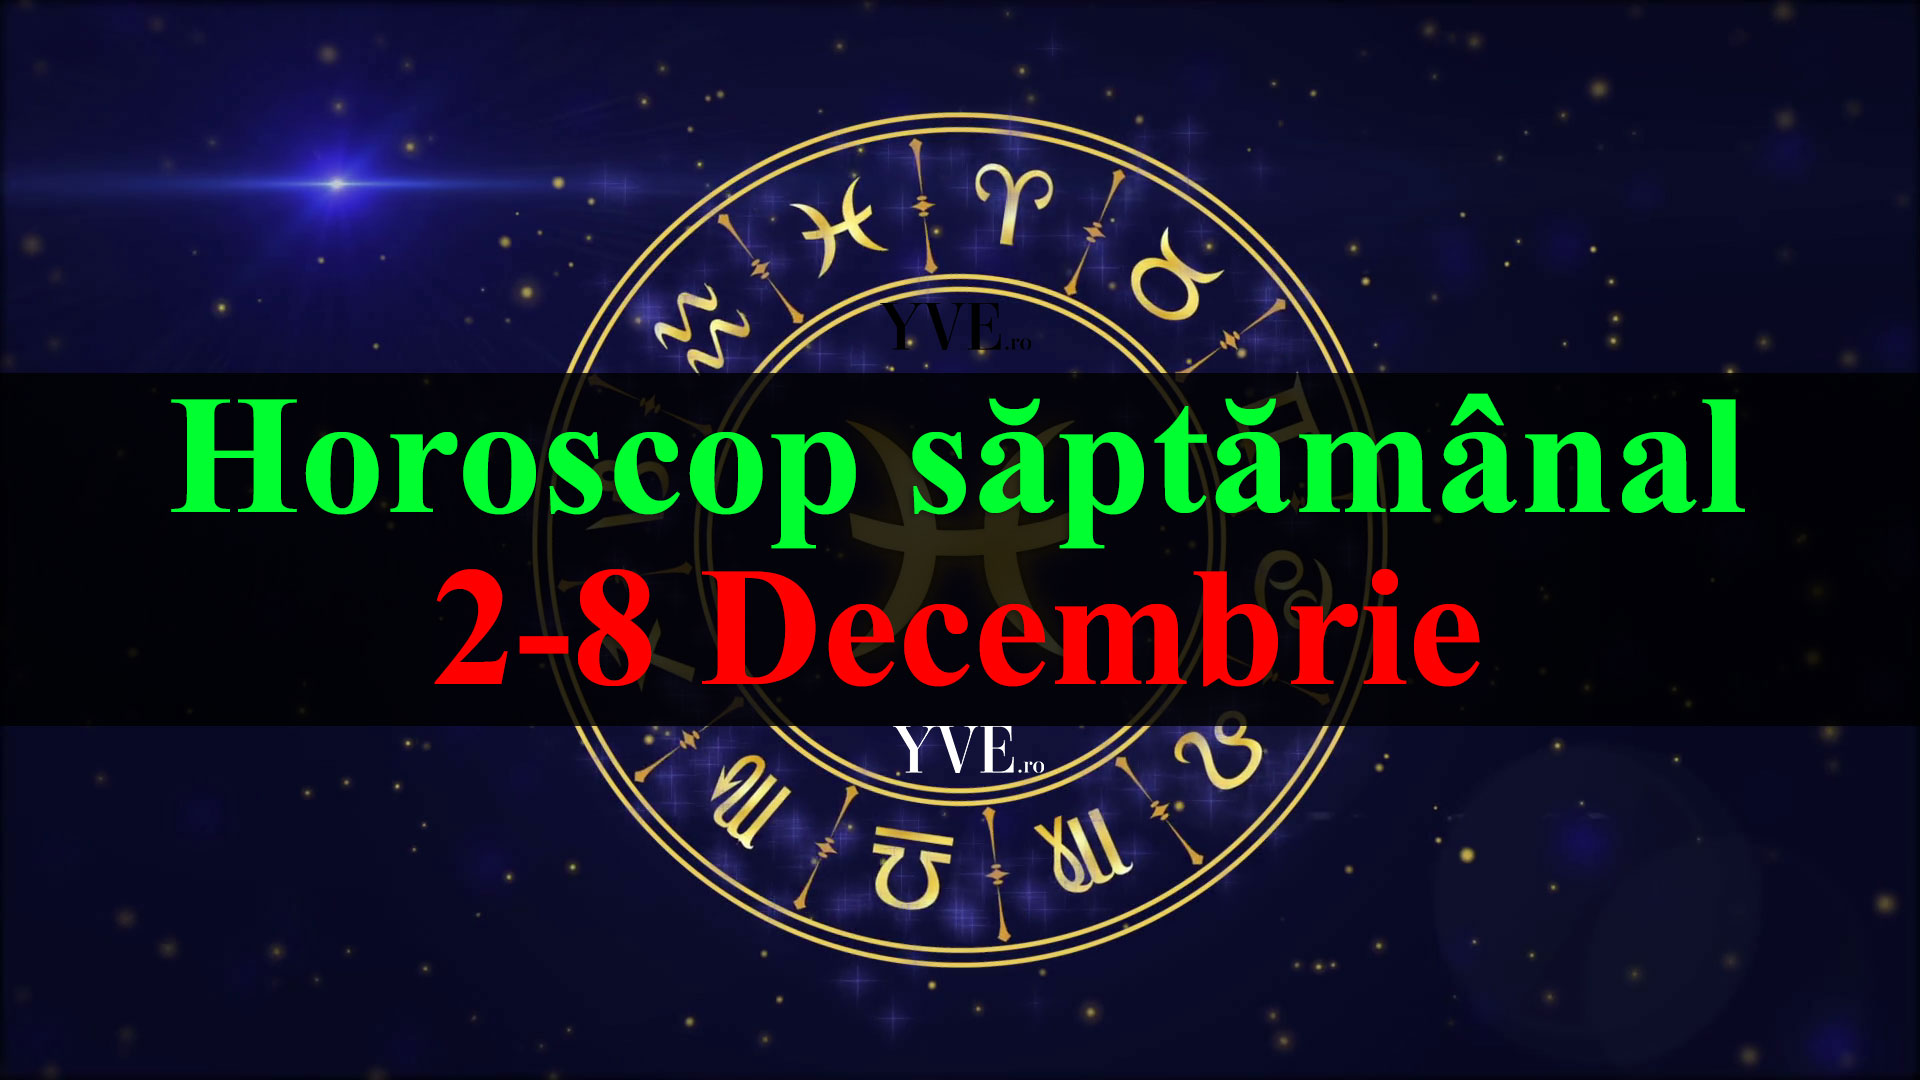 Horoscop saptamanal 2-8 Decembrie 2019